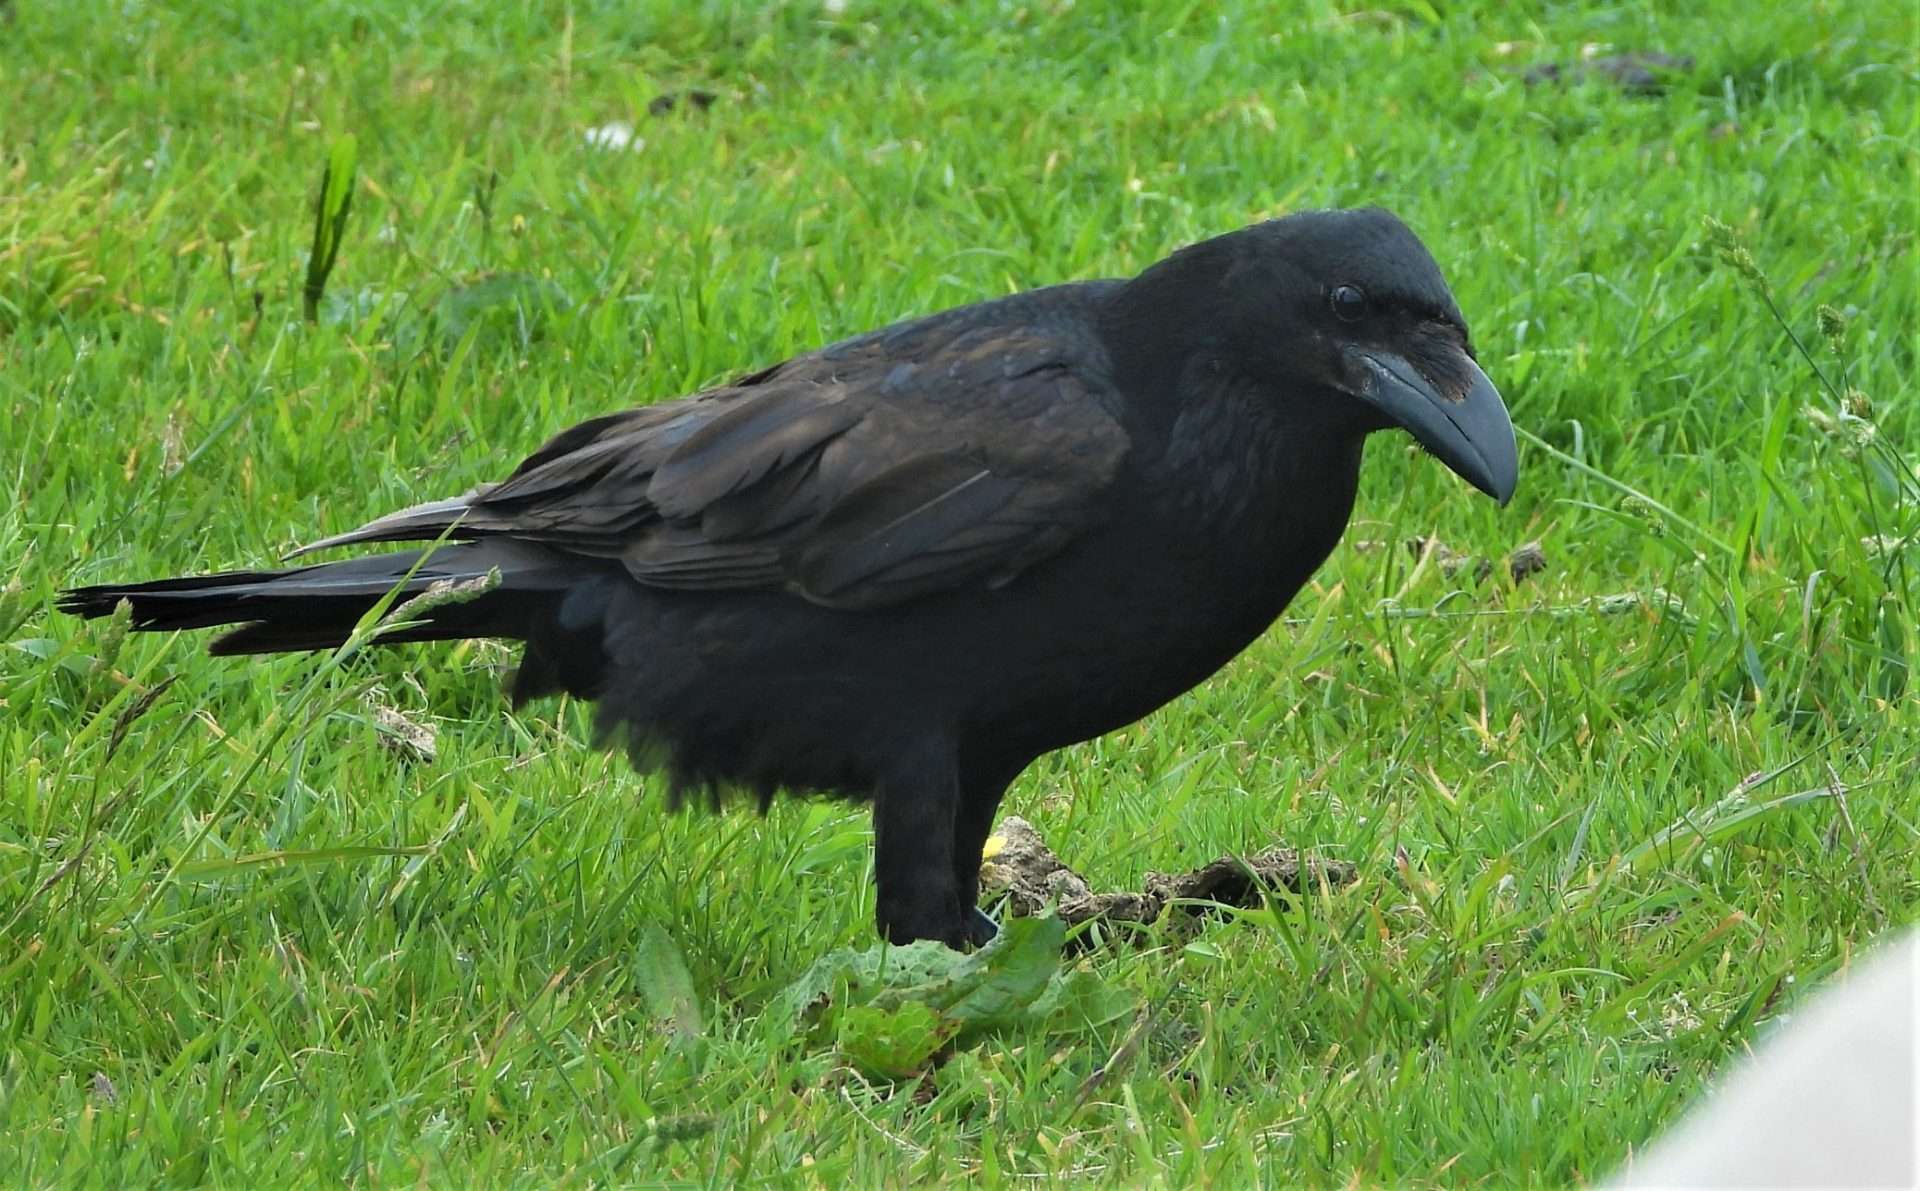 Raven by Kenneth Bradley at Lundy island